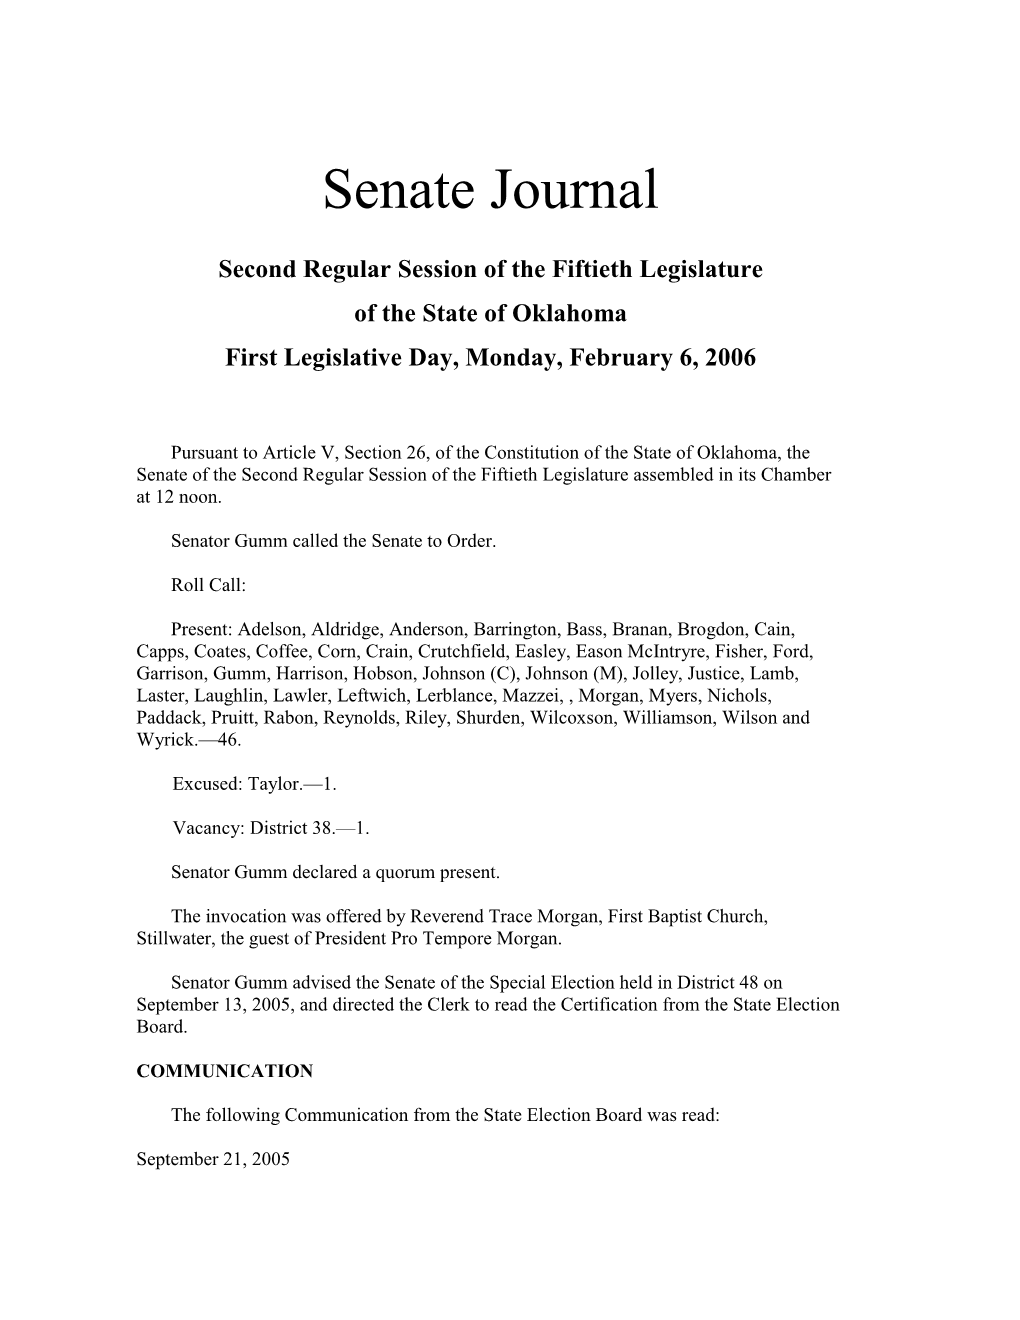 Senate Journal Feb 06, 2006